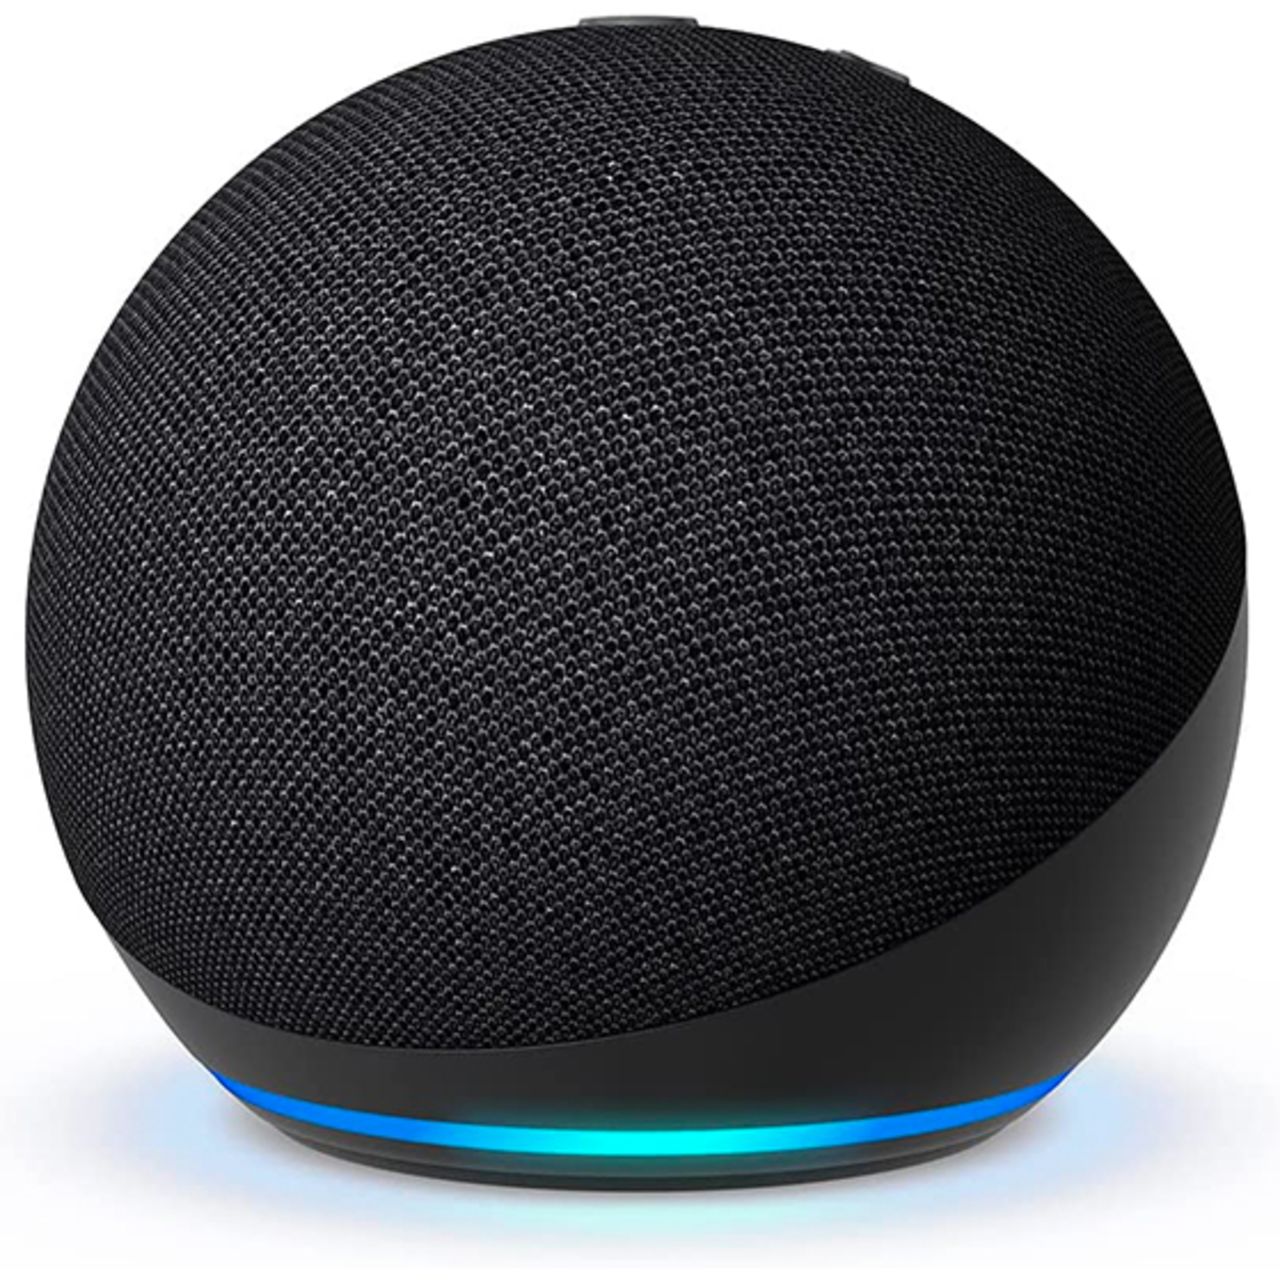 s new Echo Pop makes sense if you already use Alexa-enabled devices